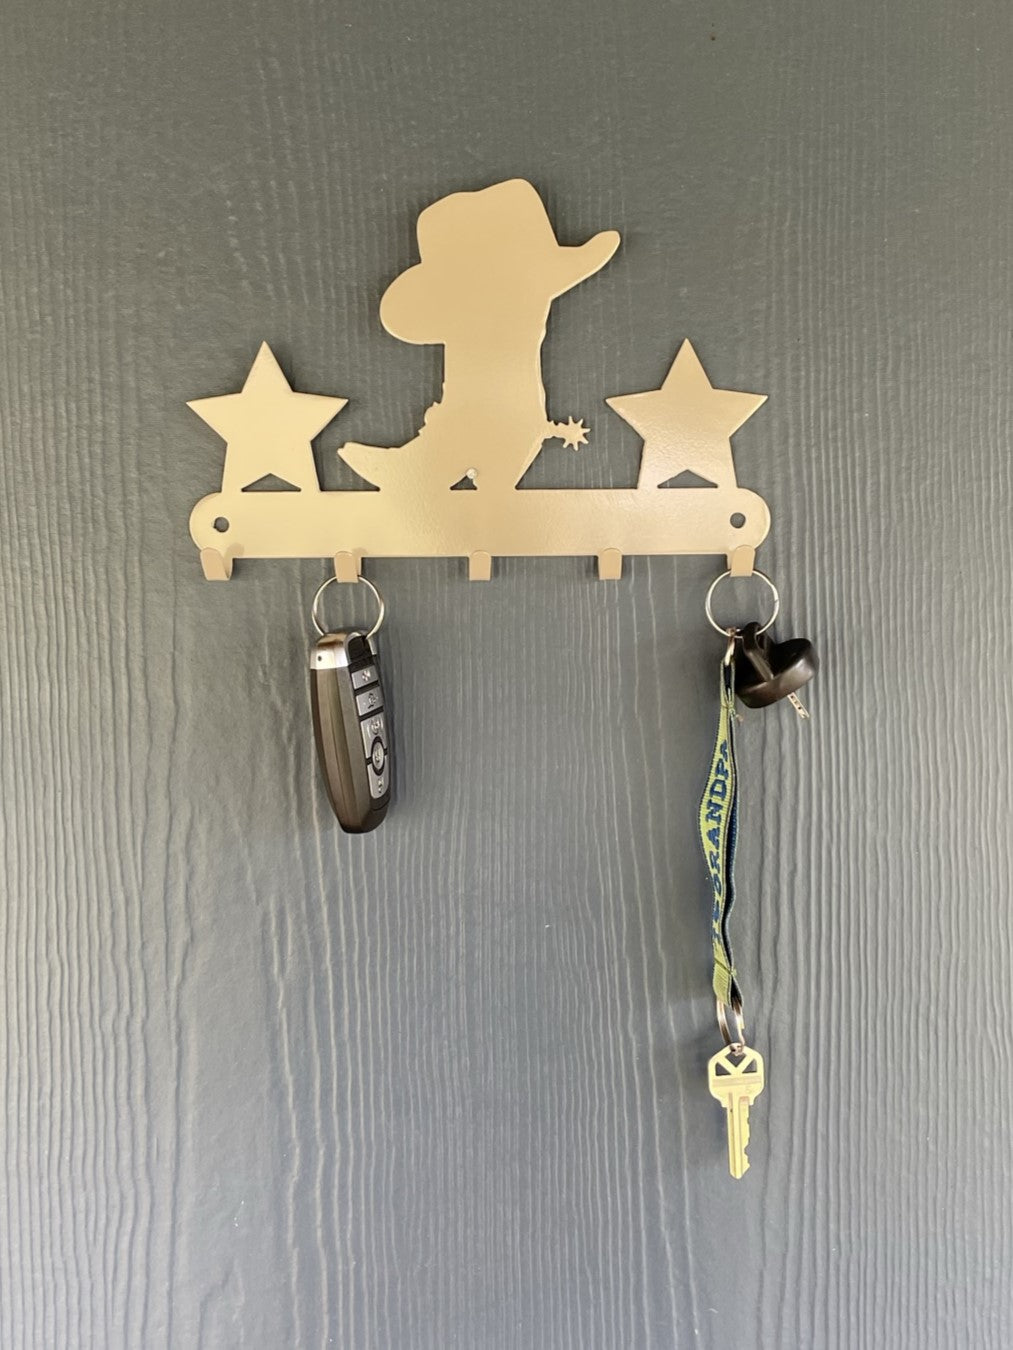 Keychain Hanger - Boots, Hat, Stars Key Ring Holder Decoration, Decorative